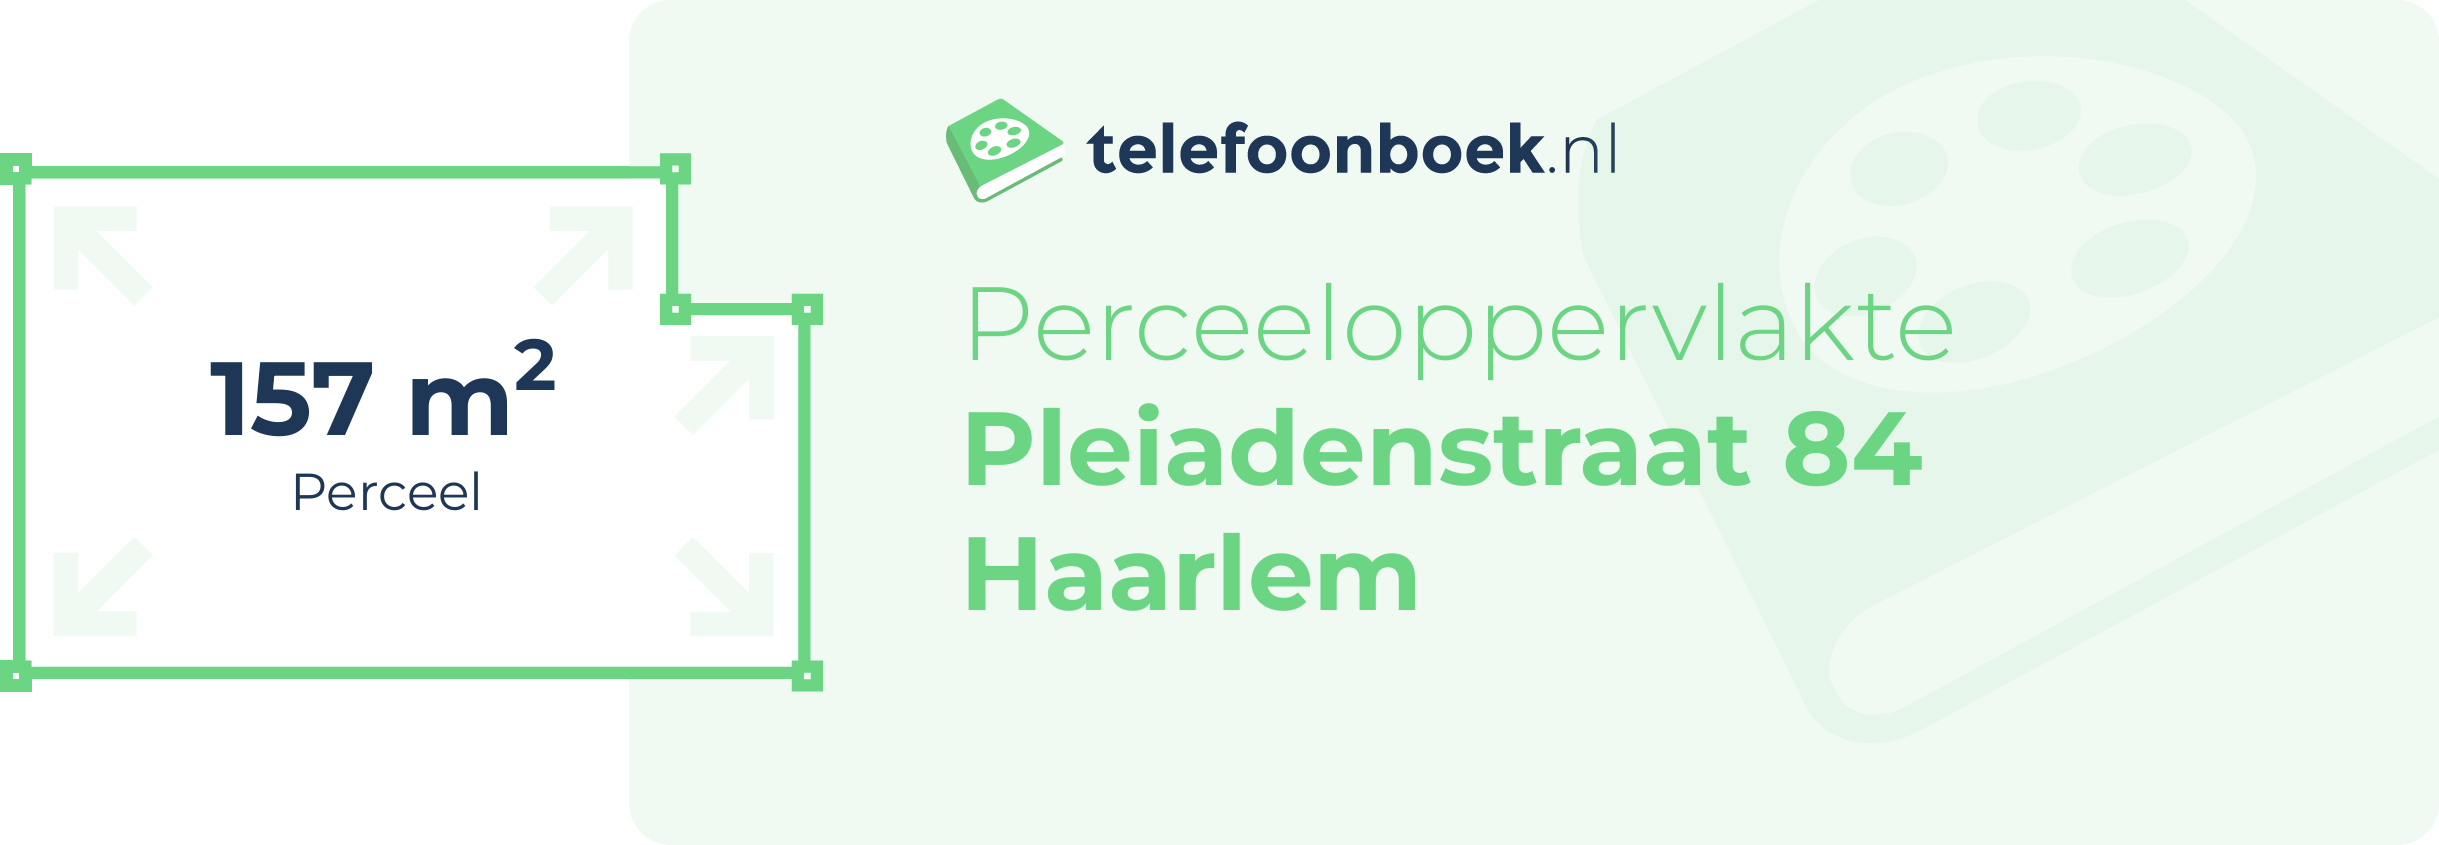 Perceeloppervlakte Pleiadenstraat 84 Haarlem